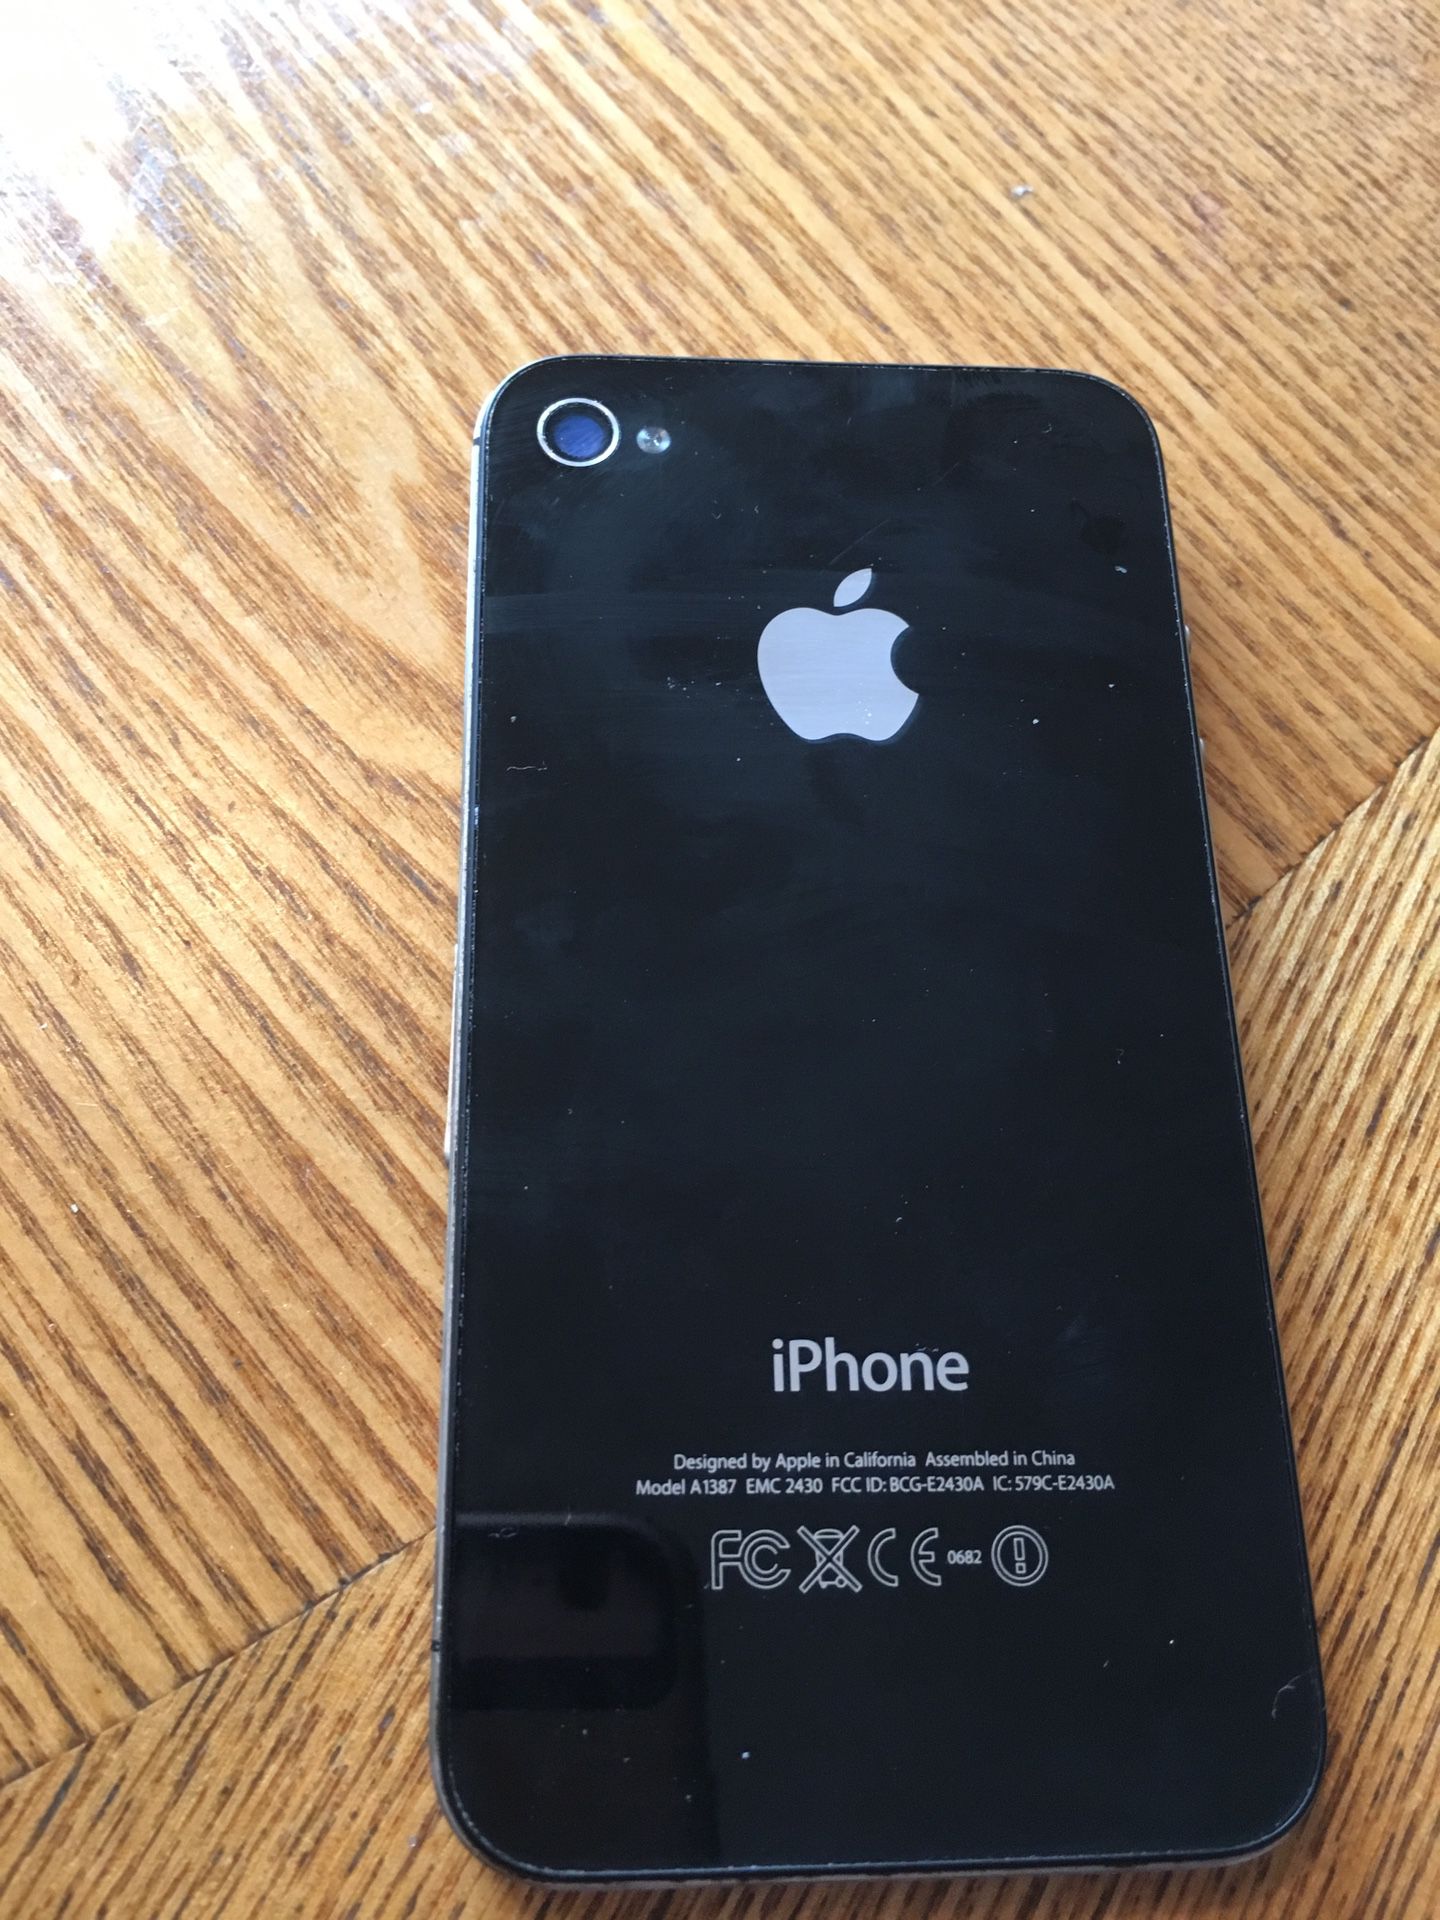 iPhone 4s Unlocked Brand New Condition